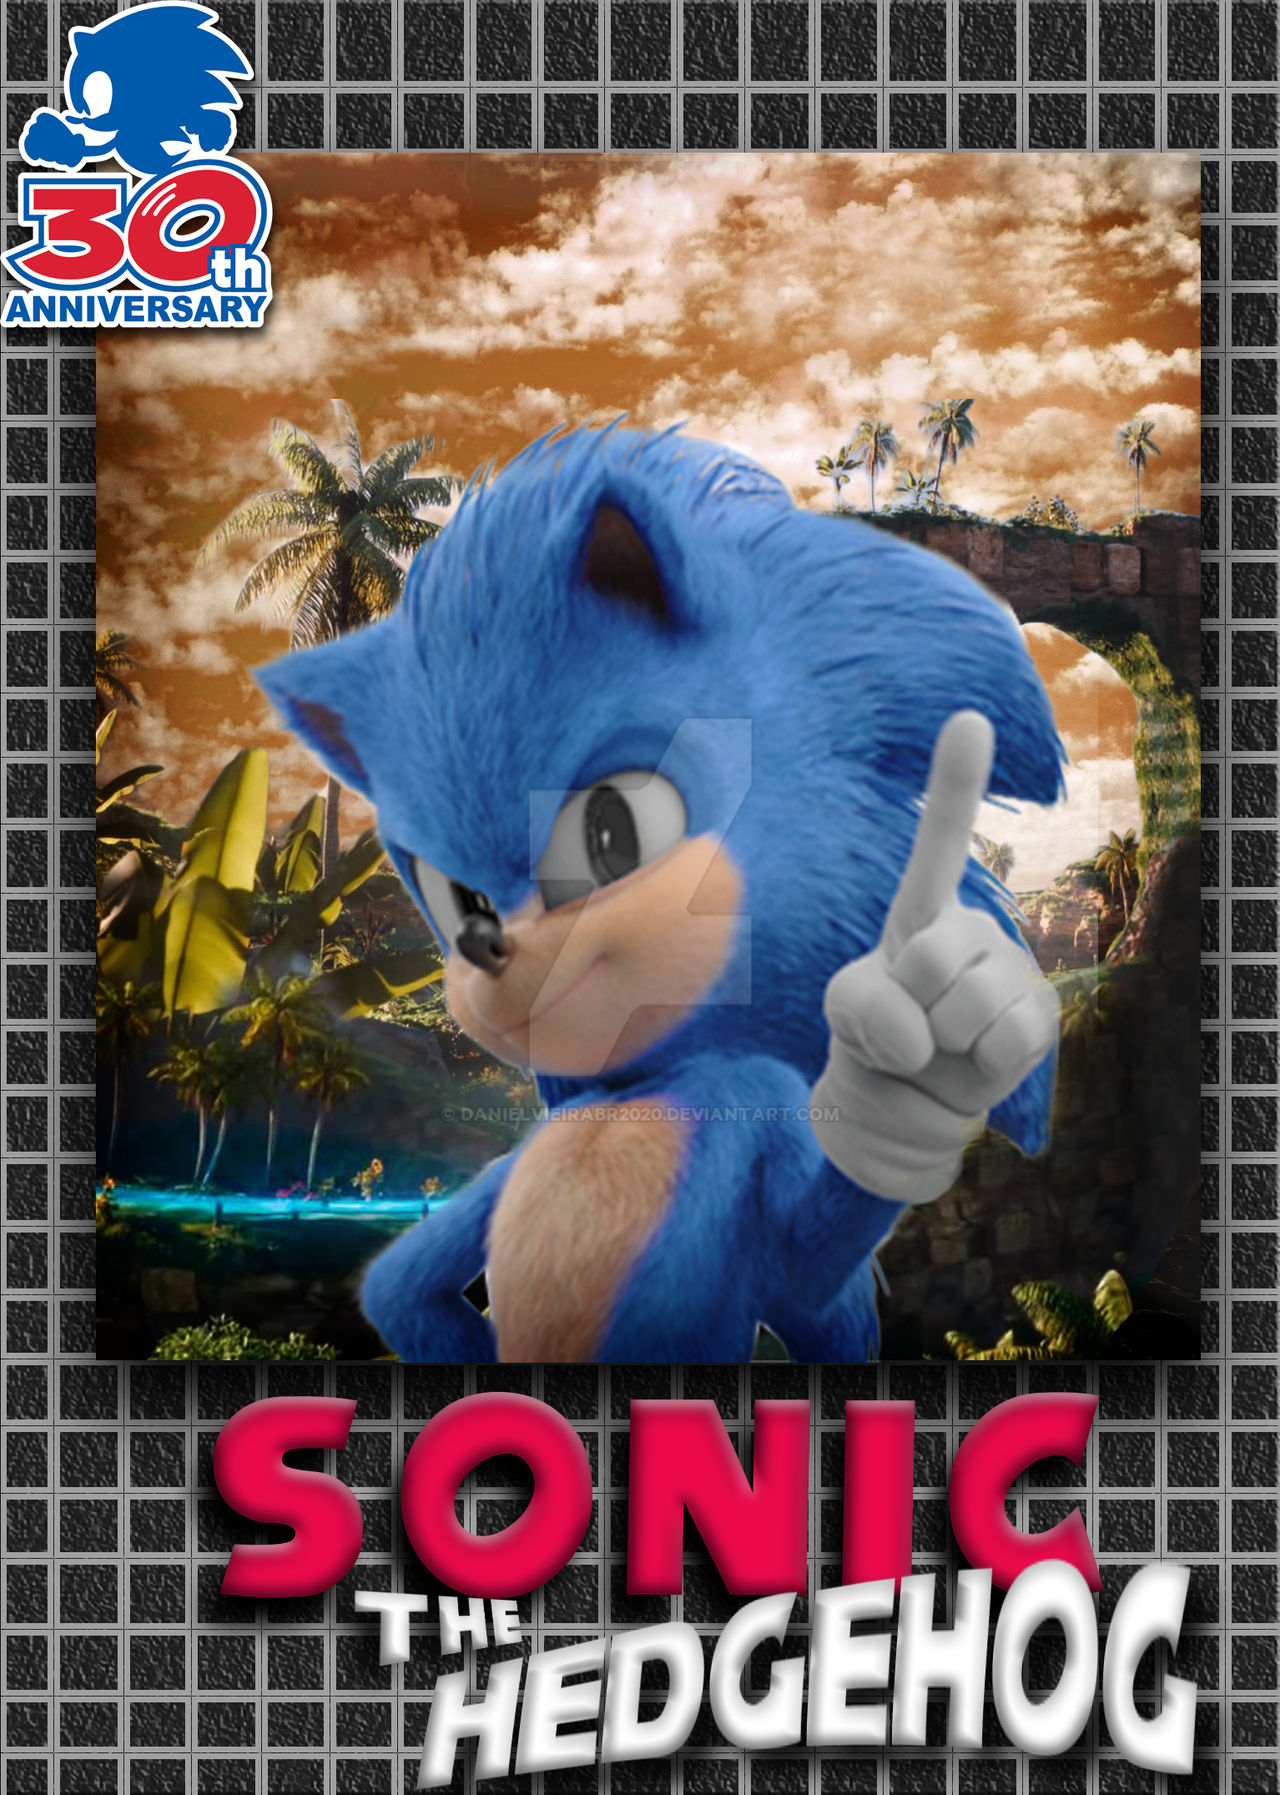 Sonic 1 Movie Edition Remaster by Geonic567Daniel on DeviantArt